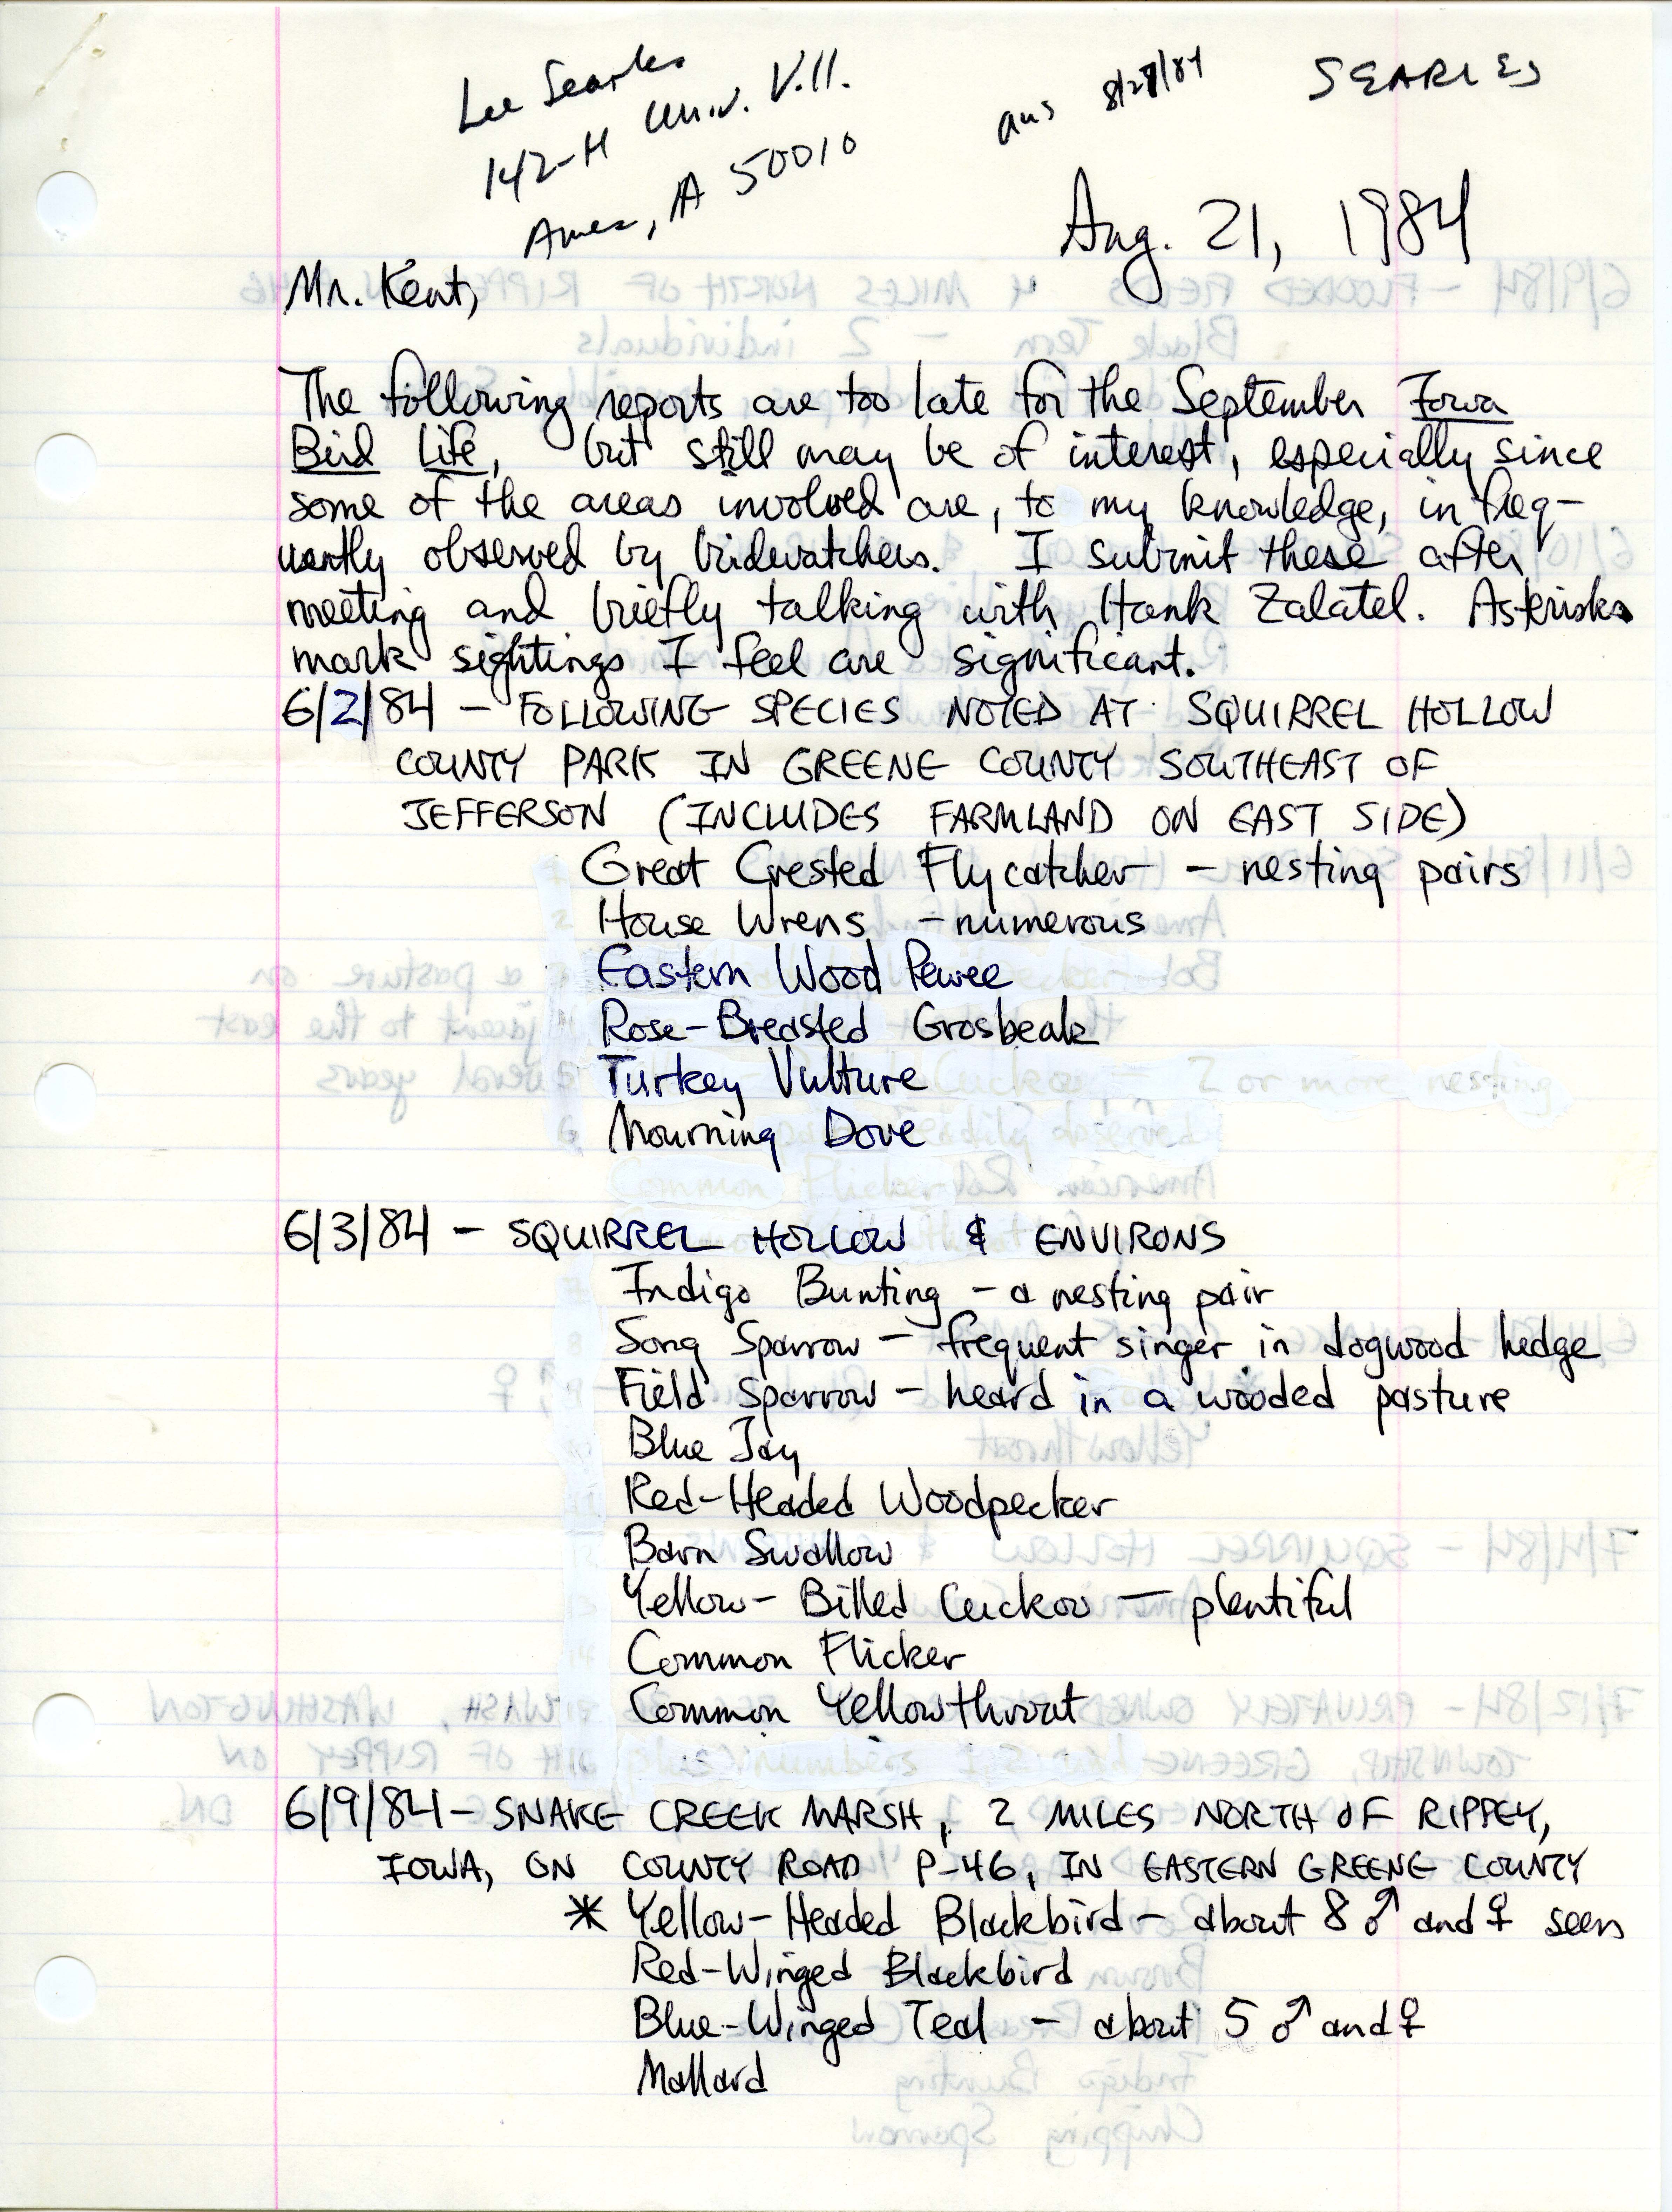 Lee Searles letter to Thomas H. Kent regarding bird sightings in Greene County, Iowa, August 21, 1984